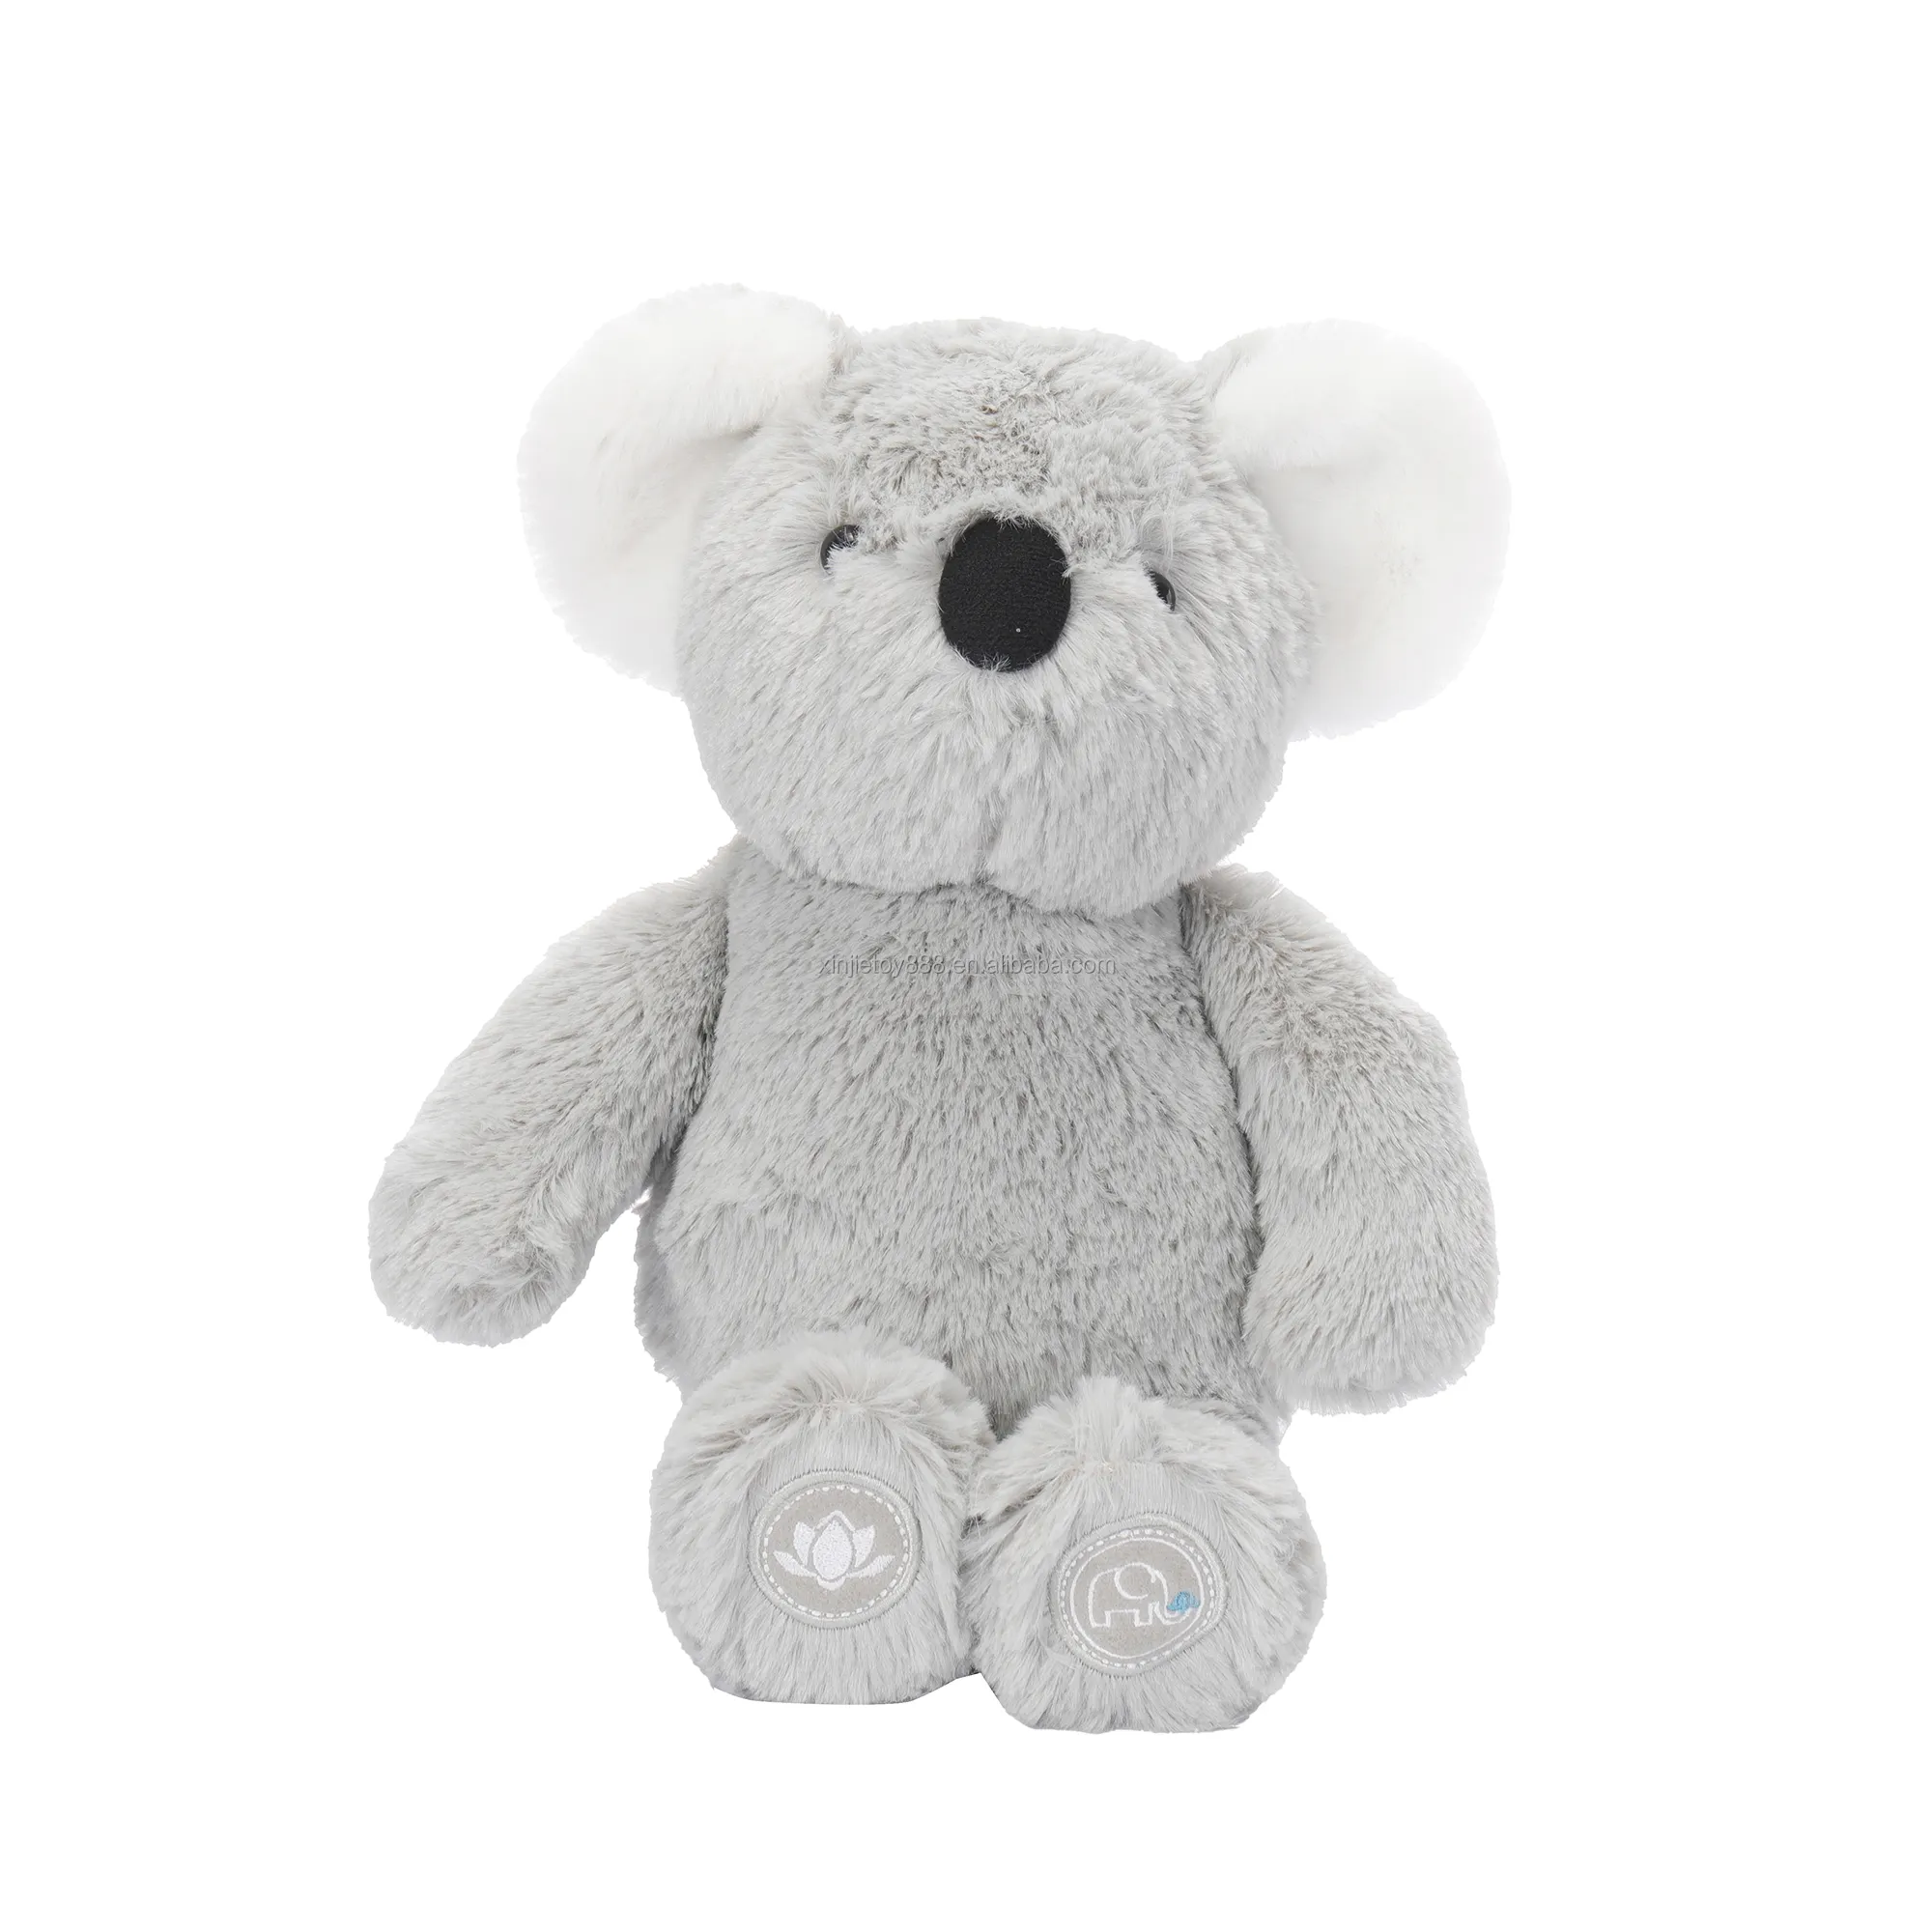 Jouet en peluche Koala personnalisé professionnel jouets en peluche avec logo brodé jouet animal koala doux